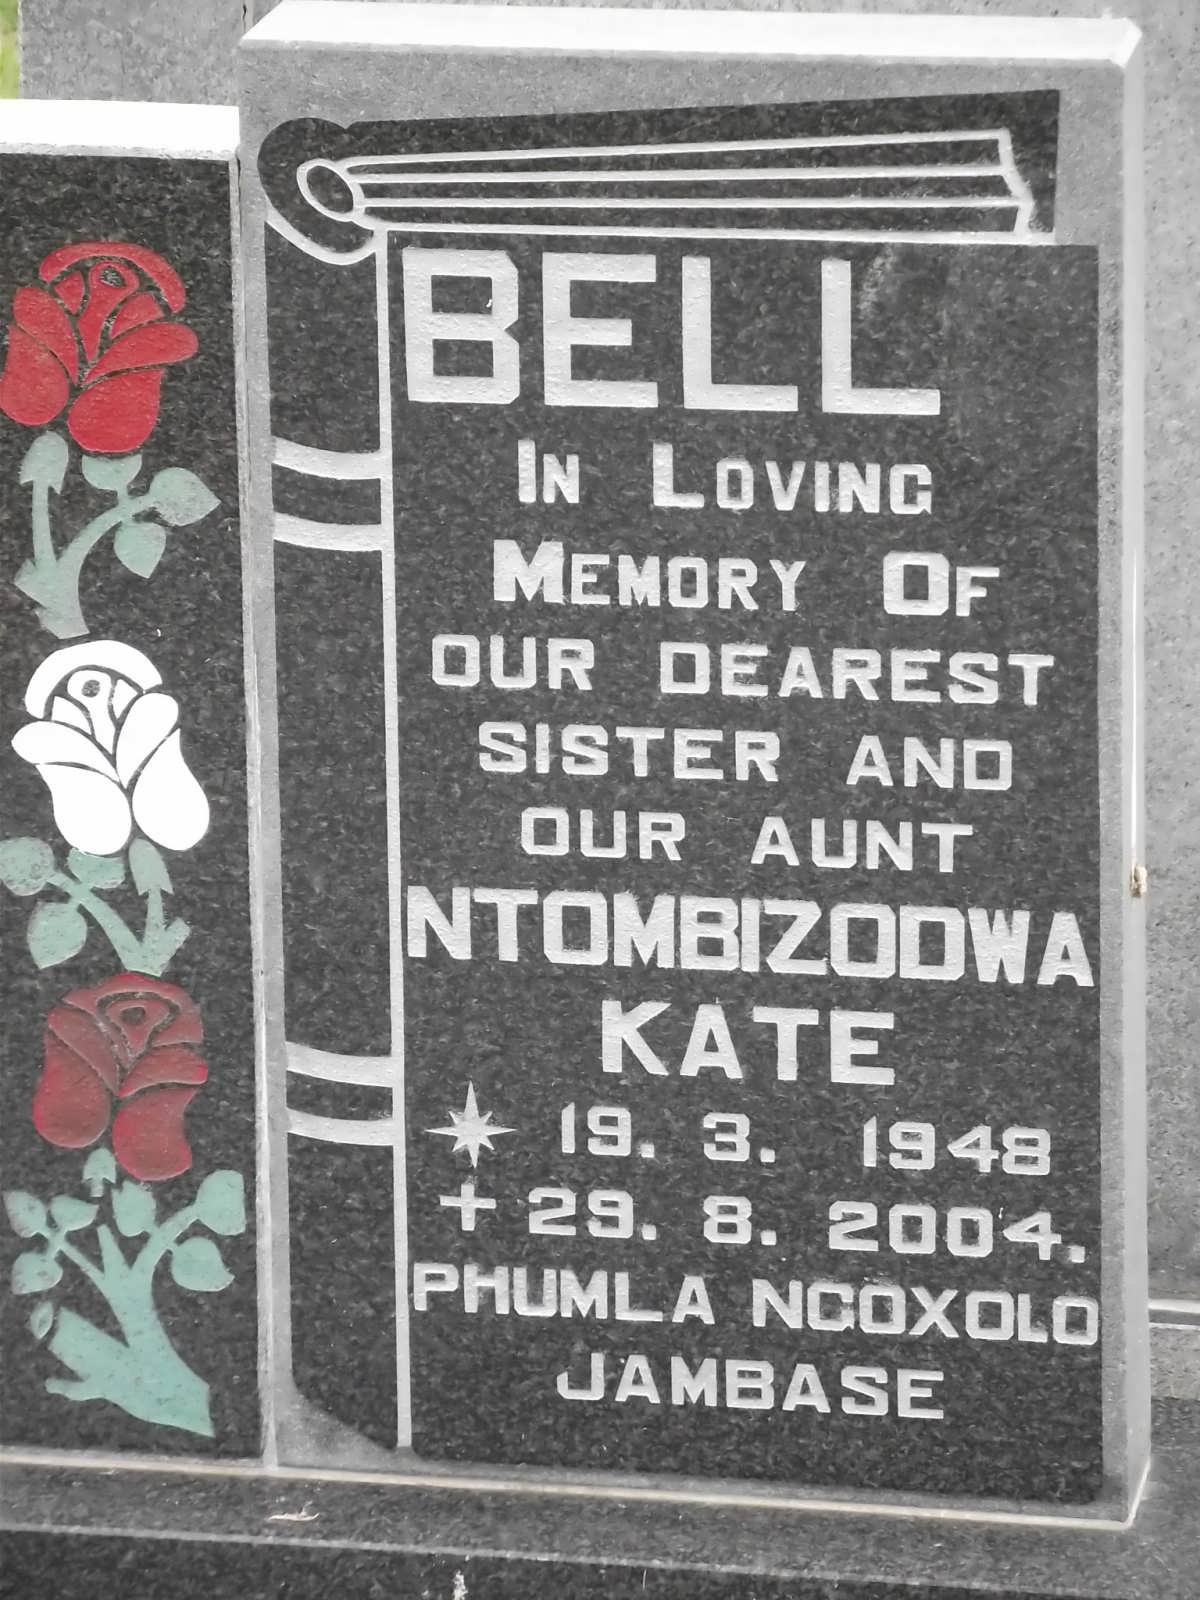 BELL Ntombizodwa Kate 1948-2004